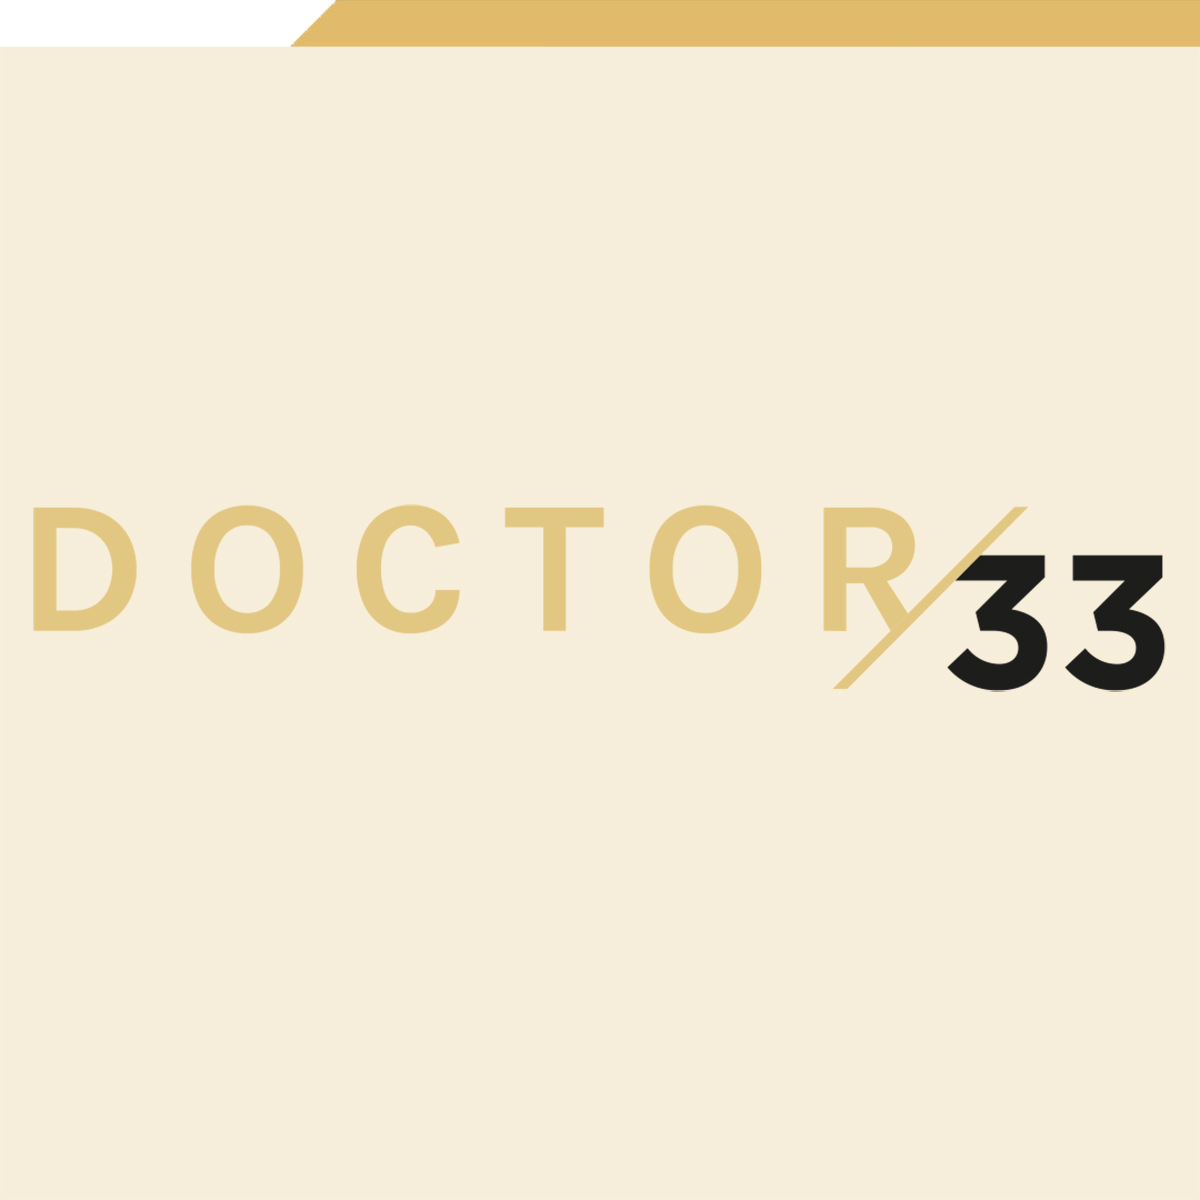 (c) Doctor33.it